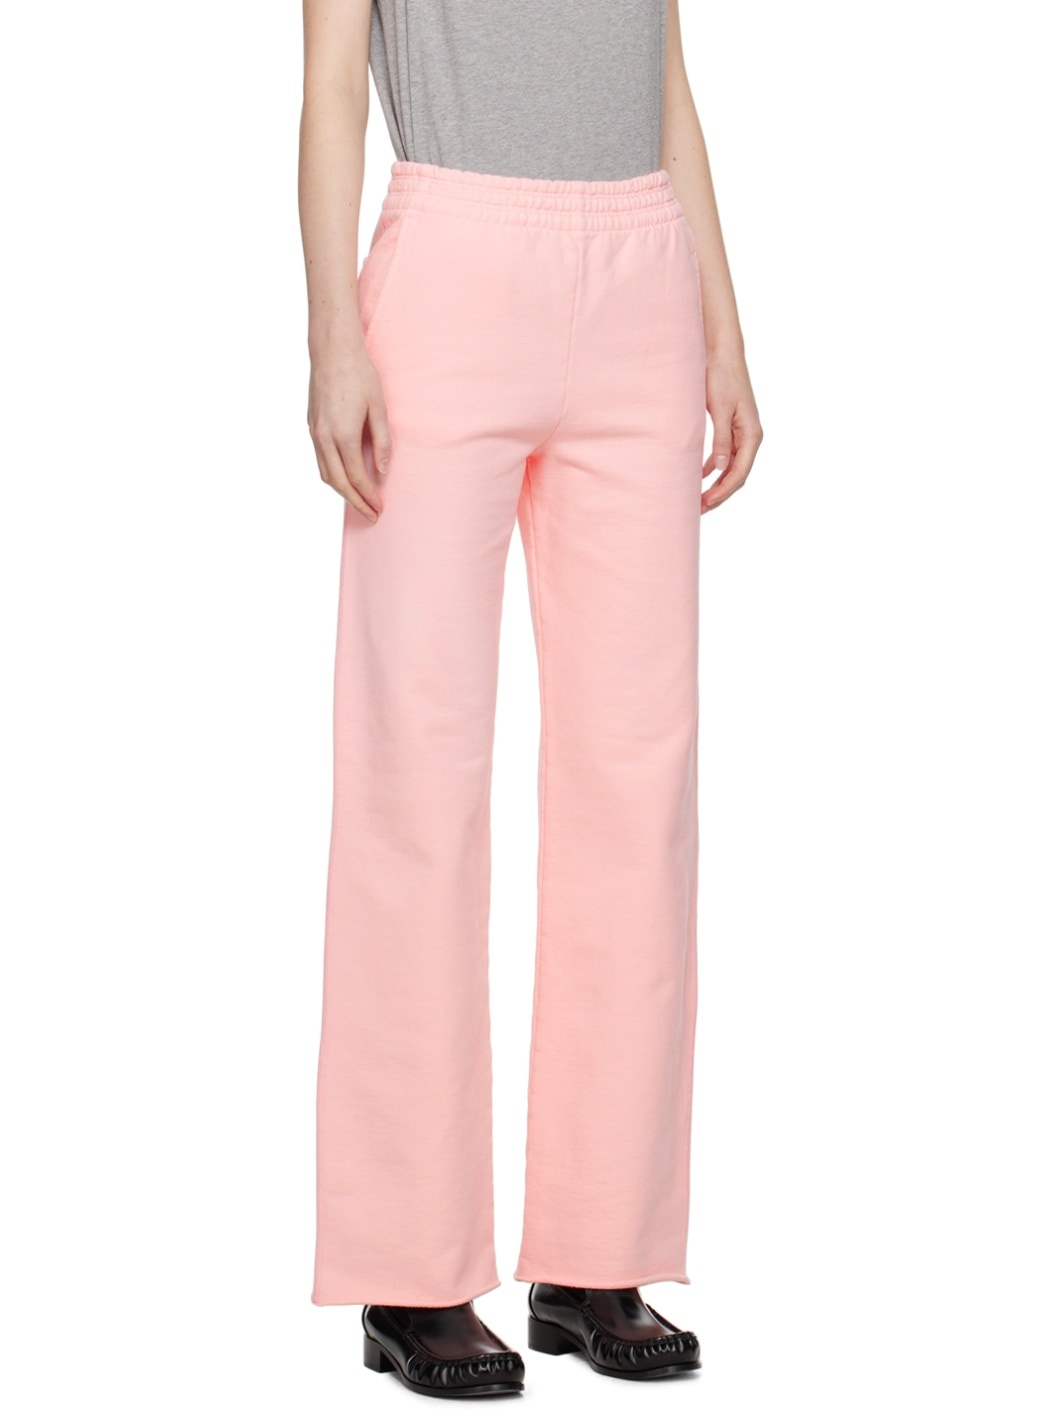 Pink Elasticized Lounge Pants - 2